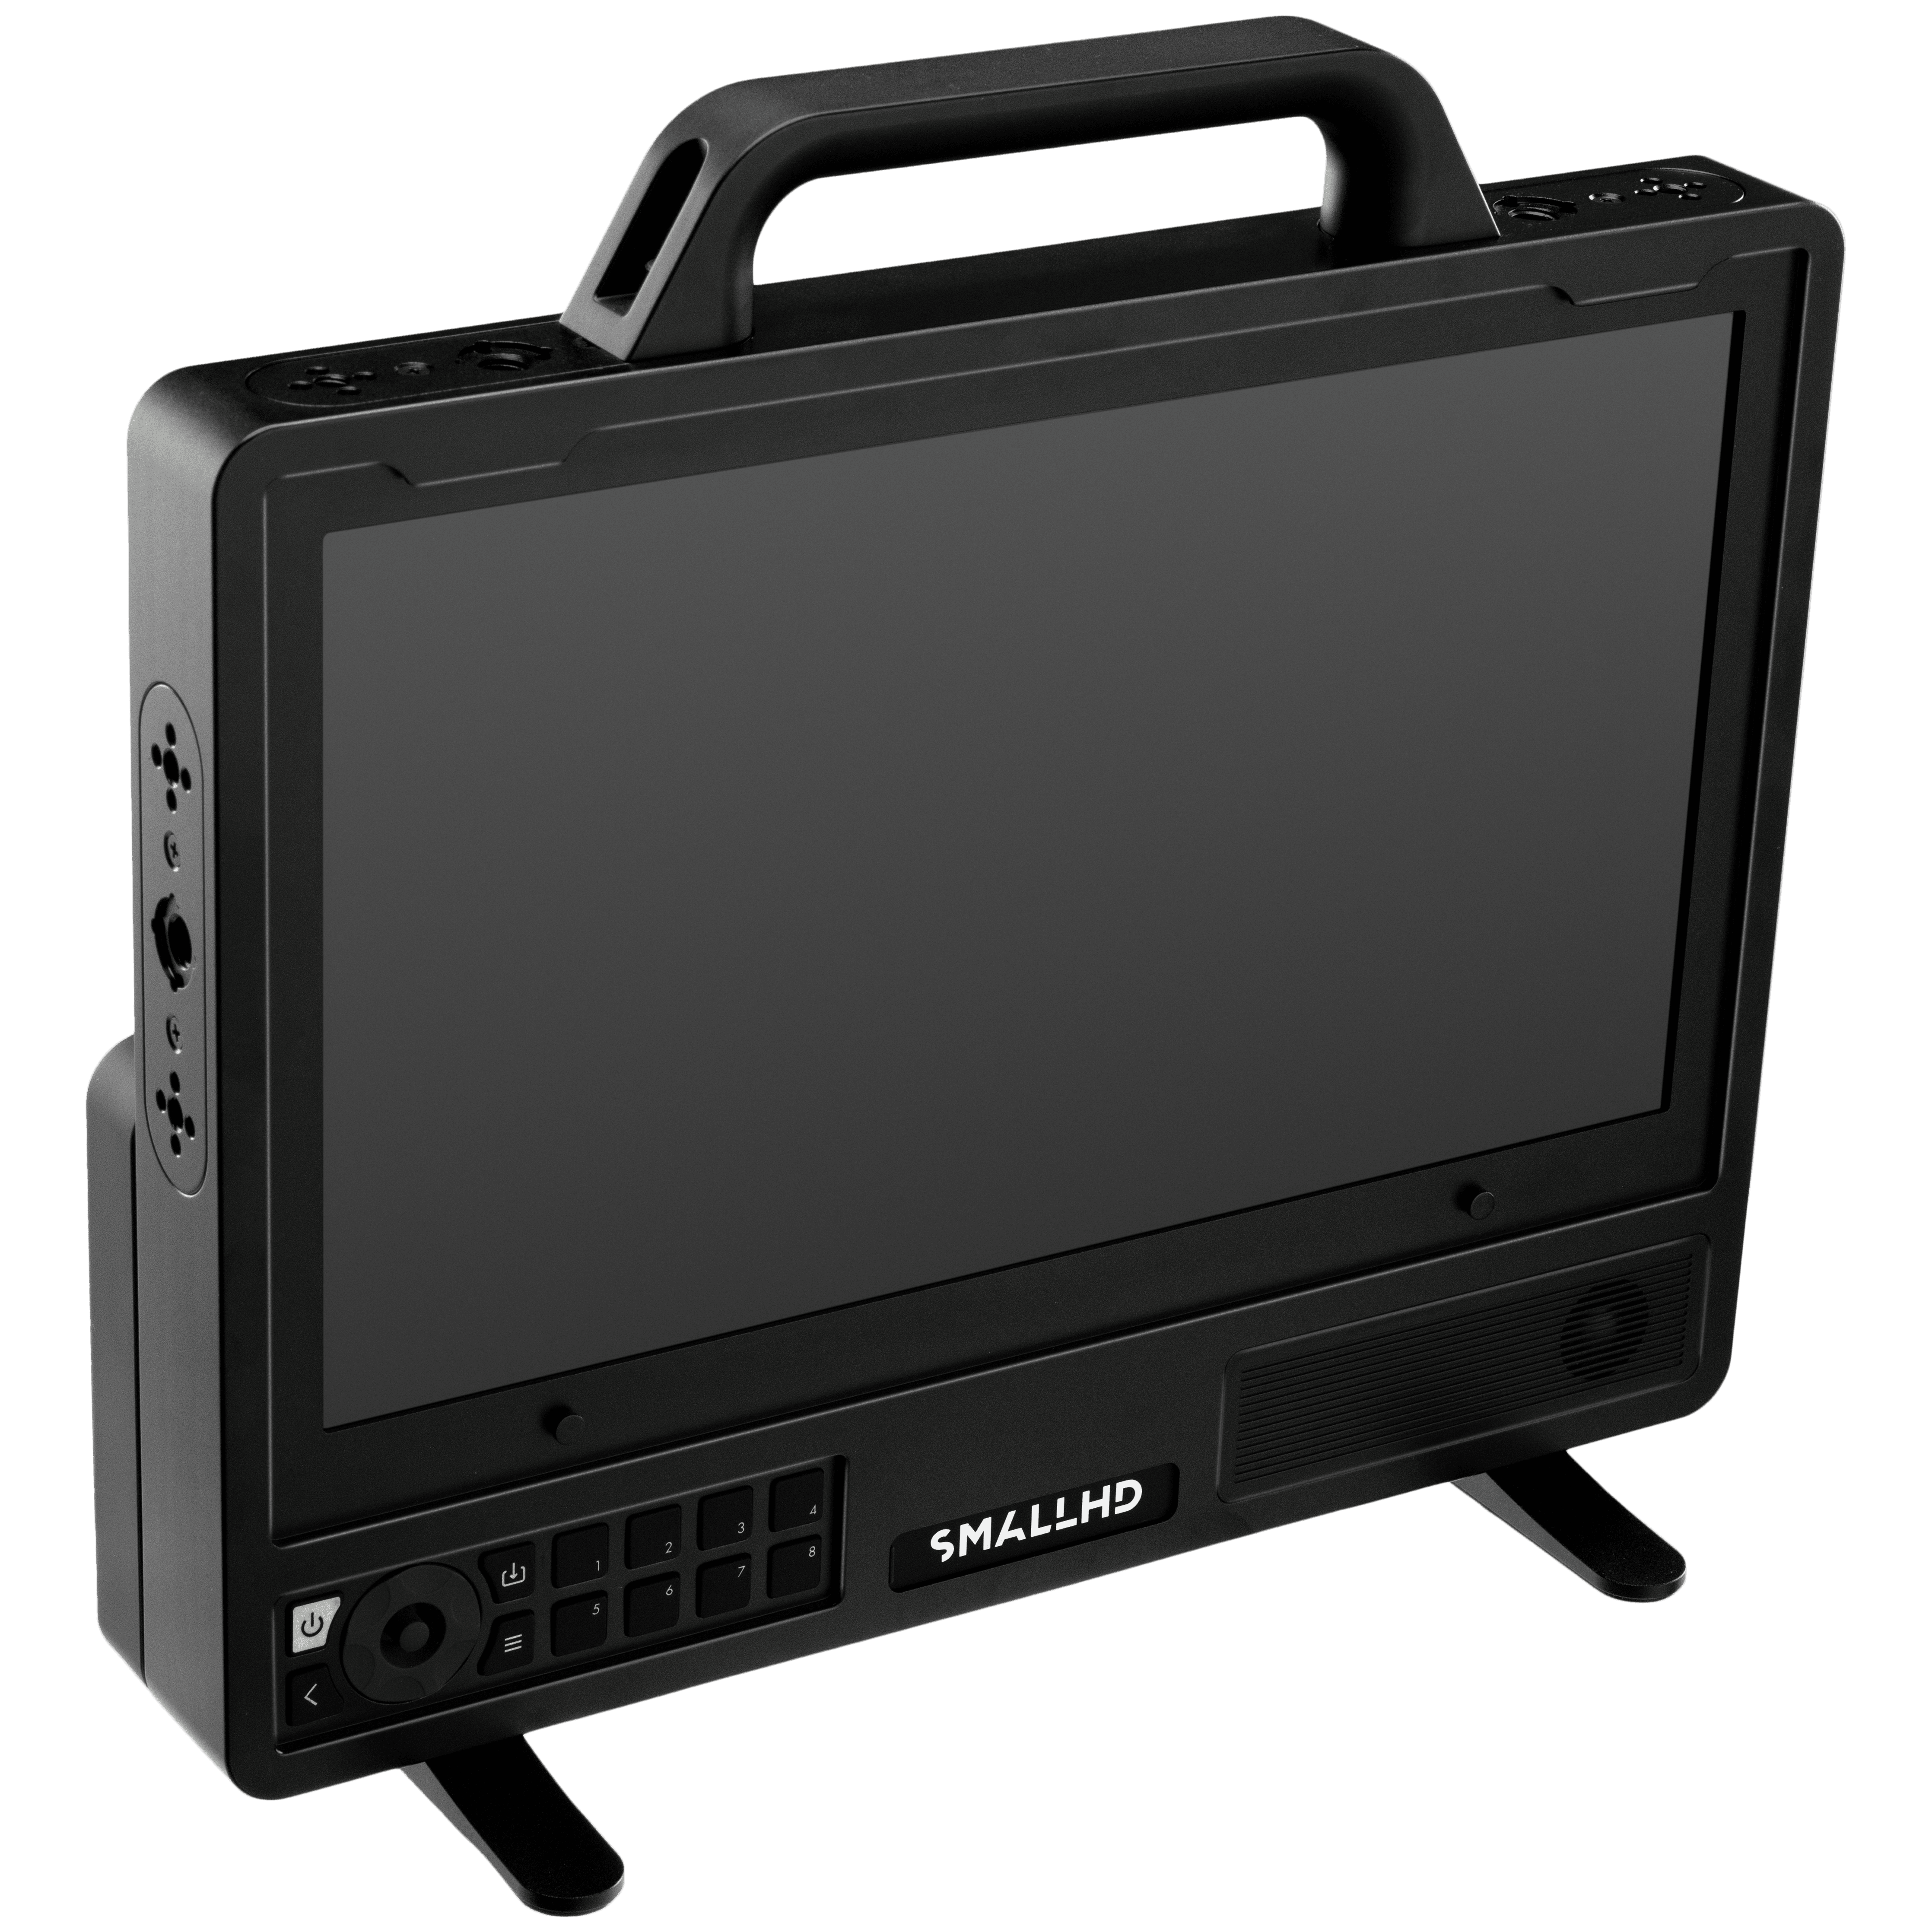 SmallHD Cine 13” 4K/UHD, HighBright Monitor, 12G-SDI / 4K HDMI, 1500Nits, 8+2 bit